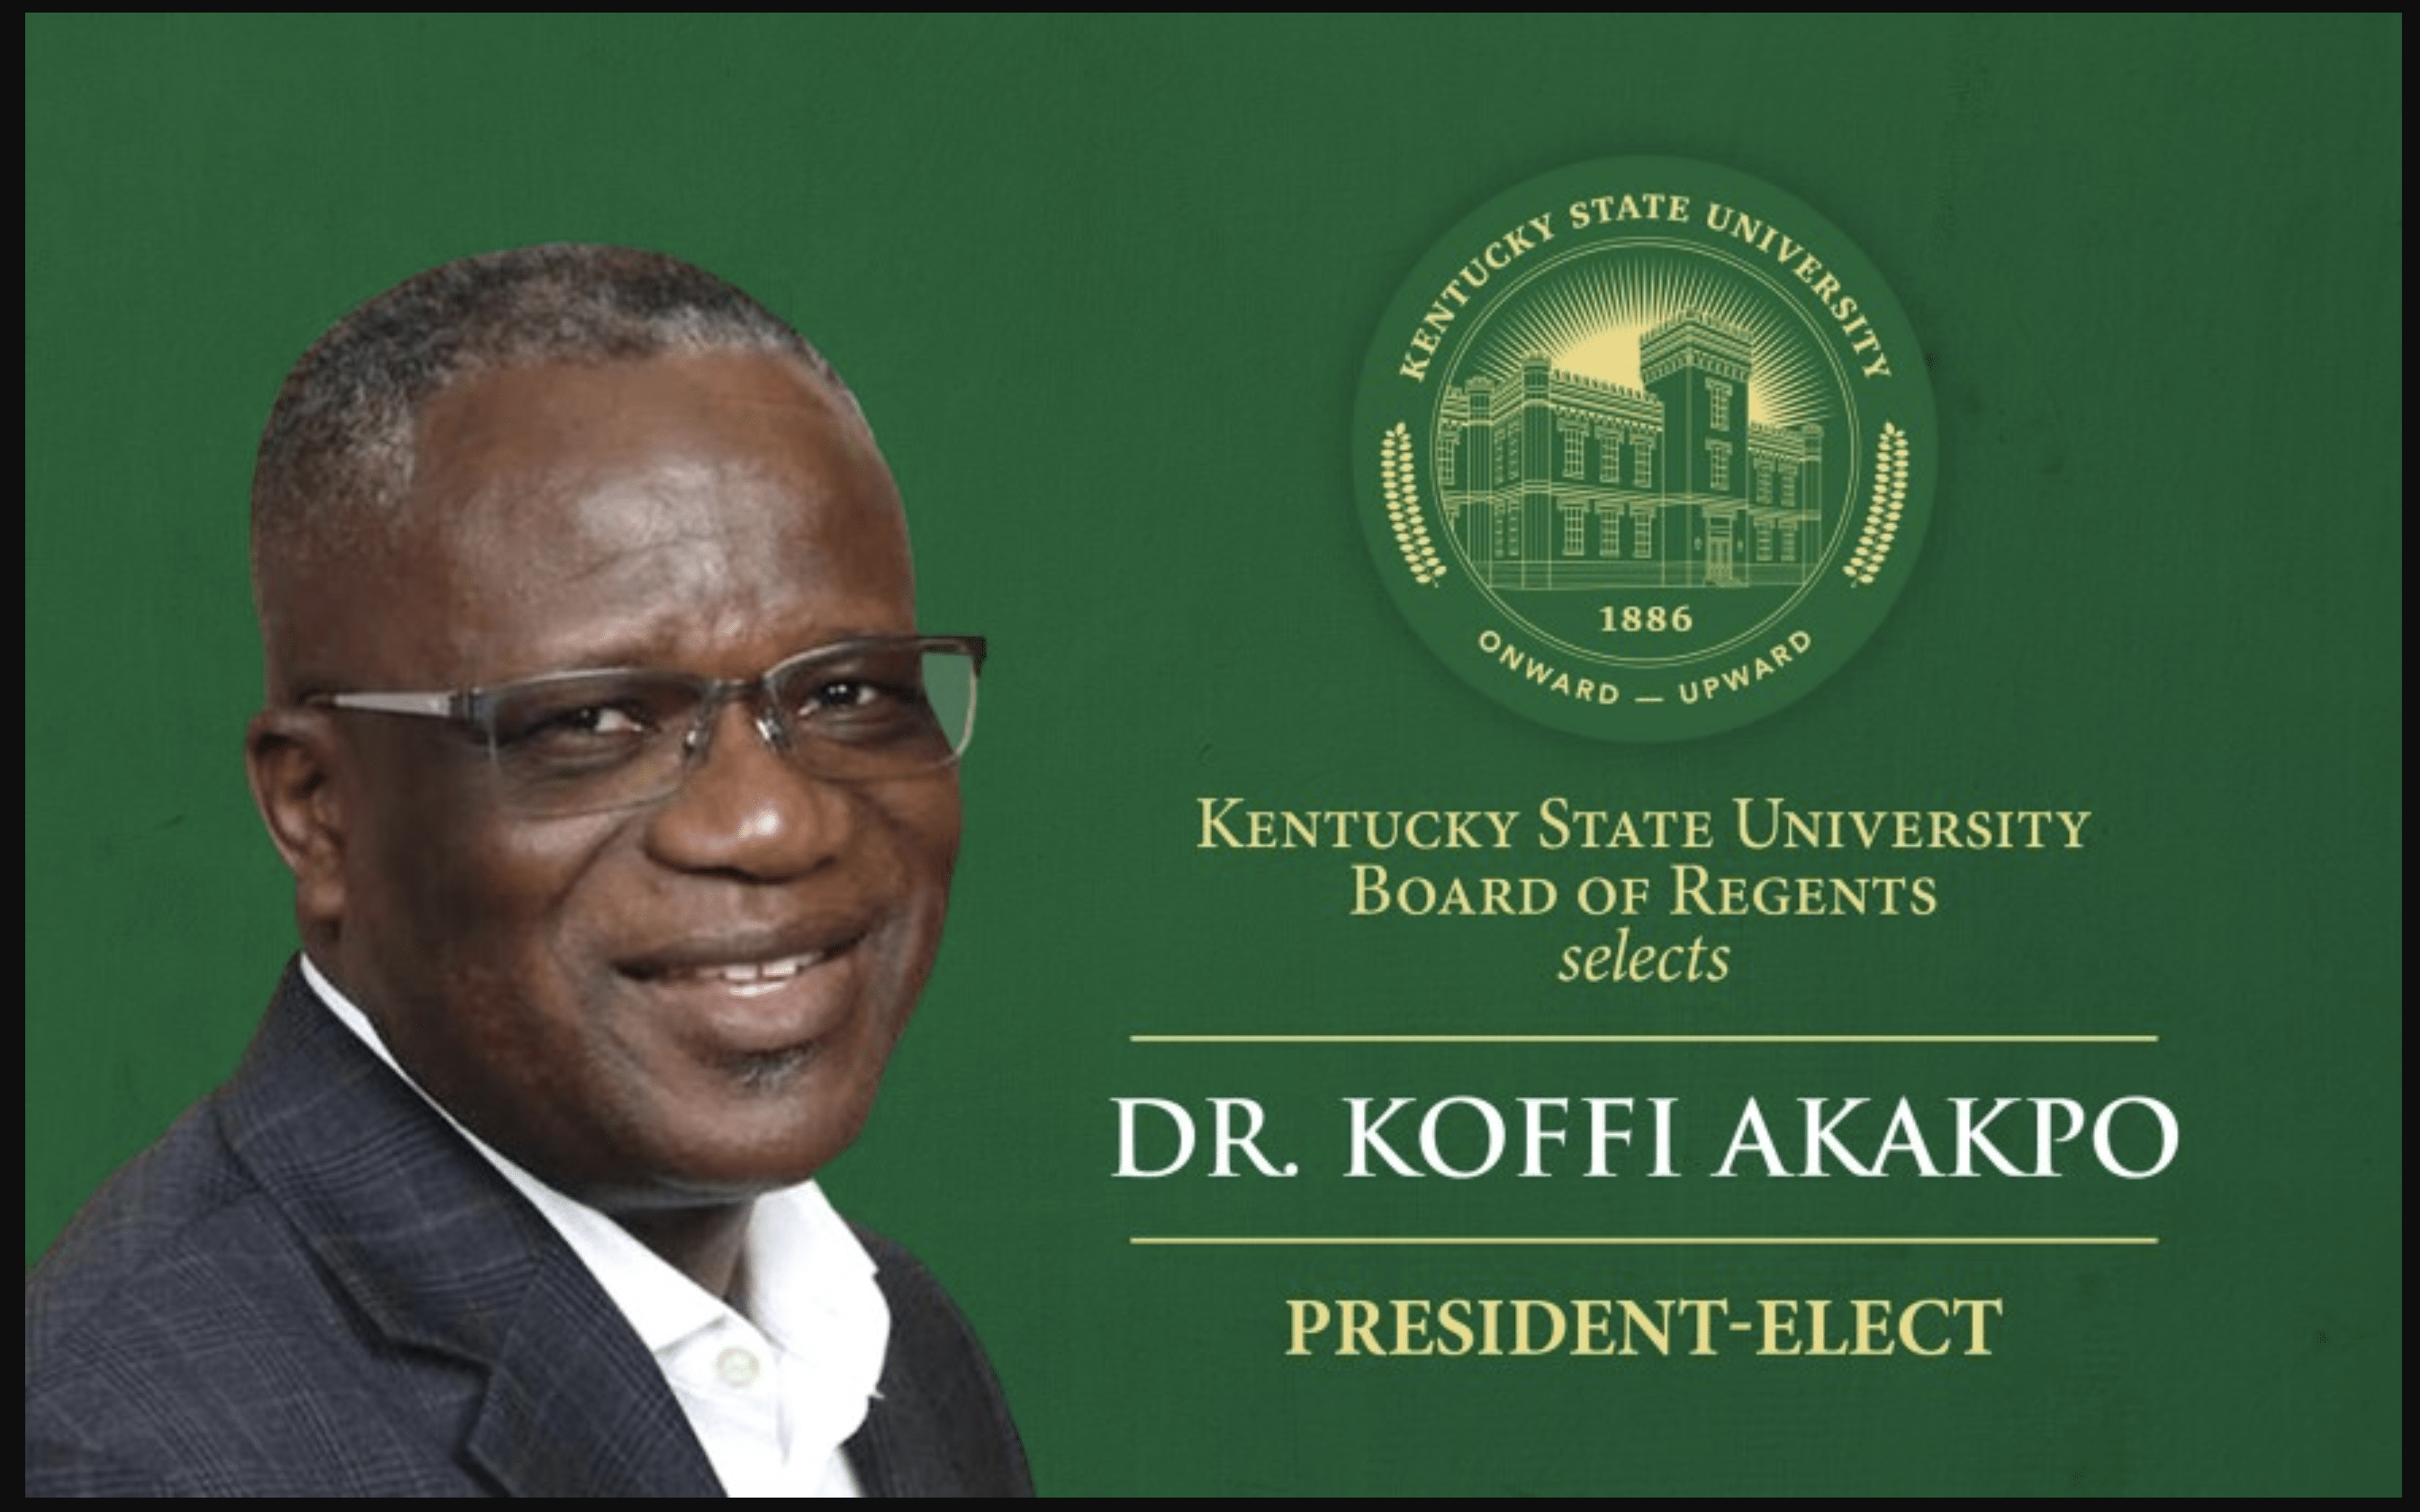 Kentucky State University names Koffi Akakpo president